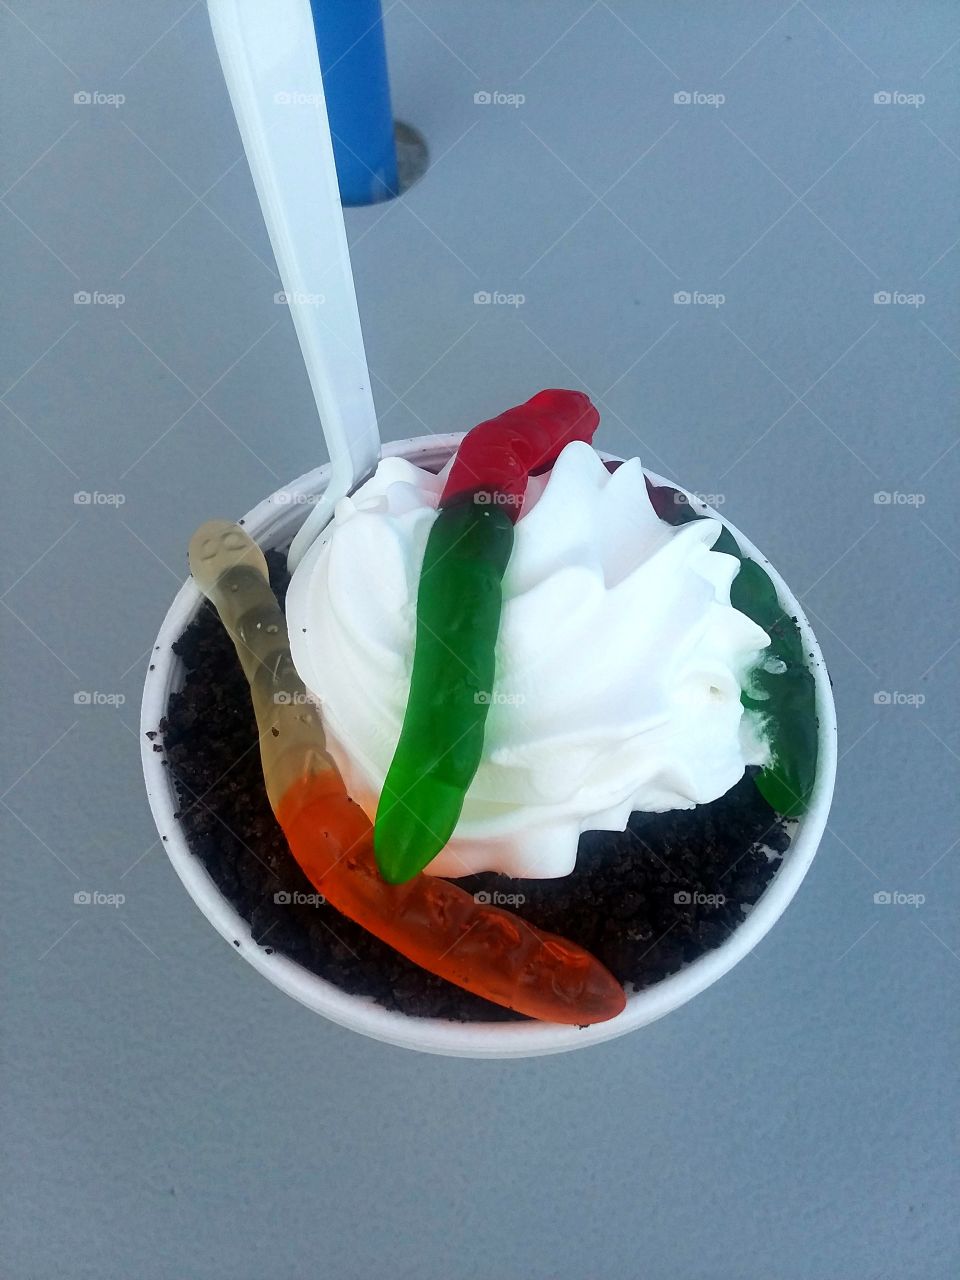 Gummy worm oreo ice cream sundae with whipped cream.